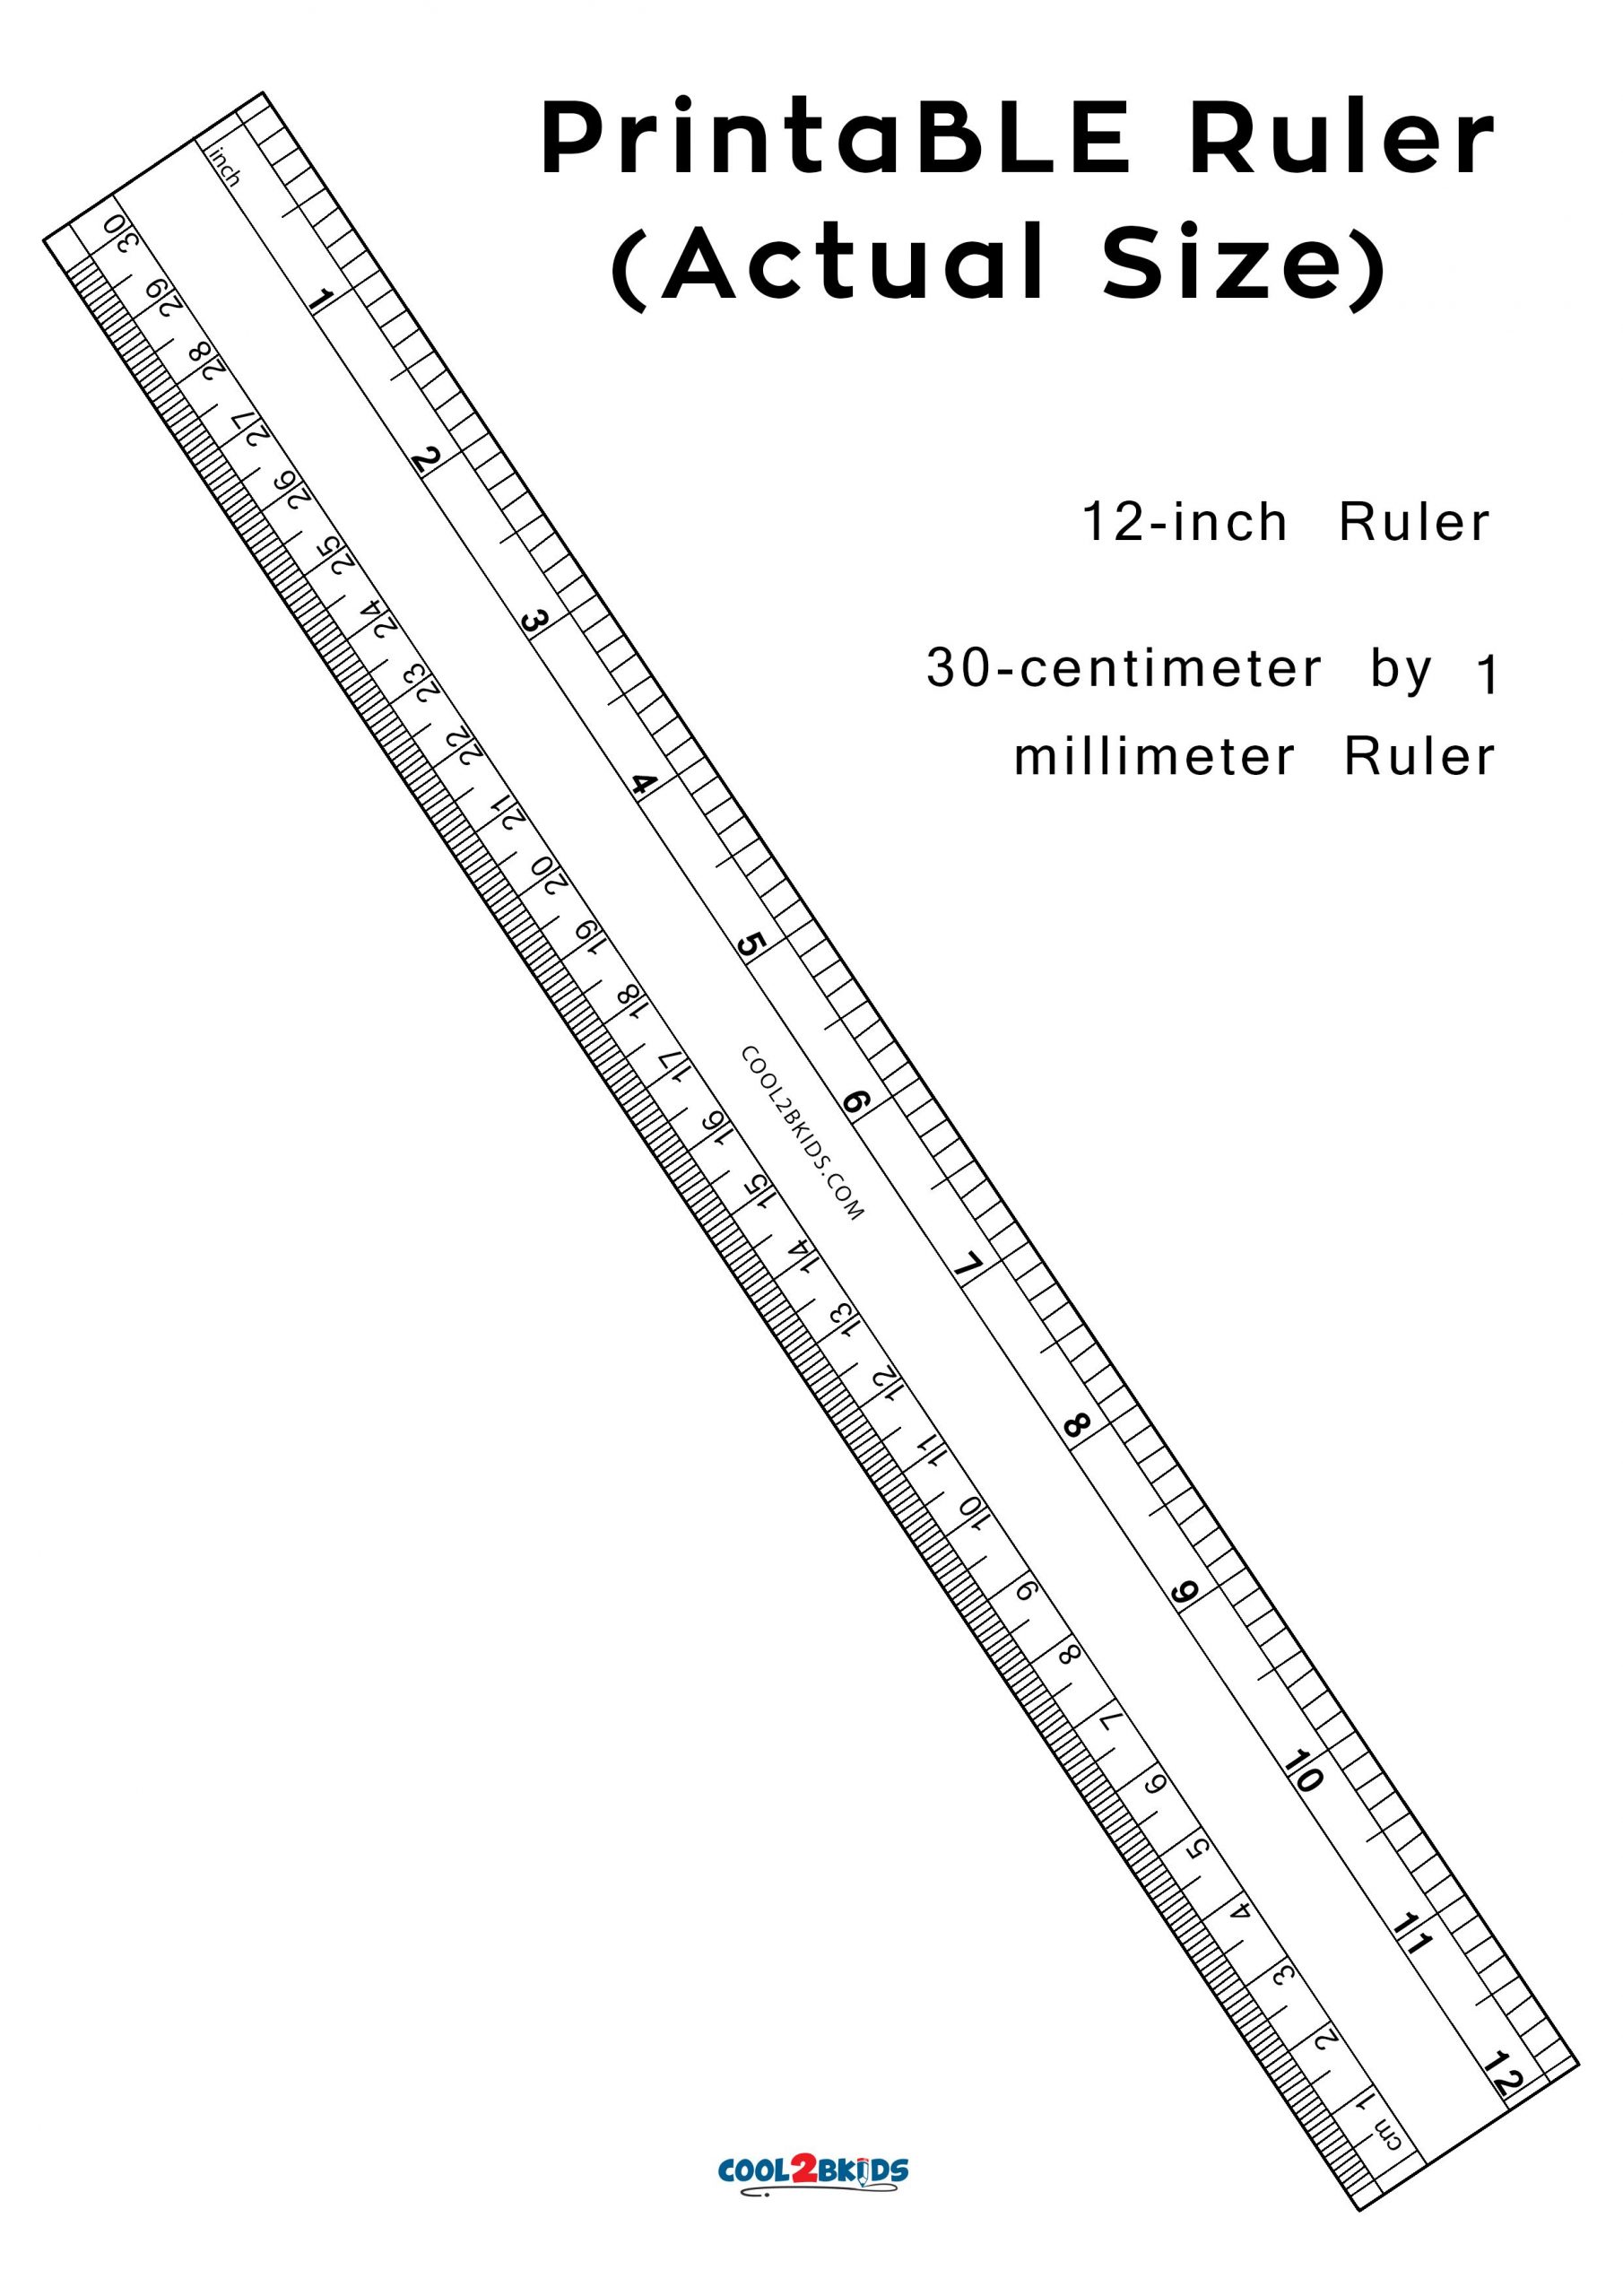 Printables | Cool2Bkids | Printable Ruler, Ruler, Millimeter